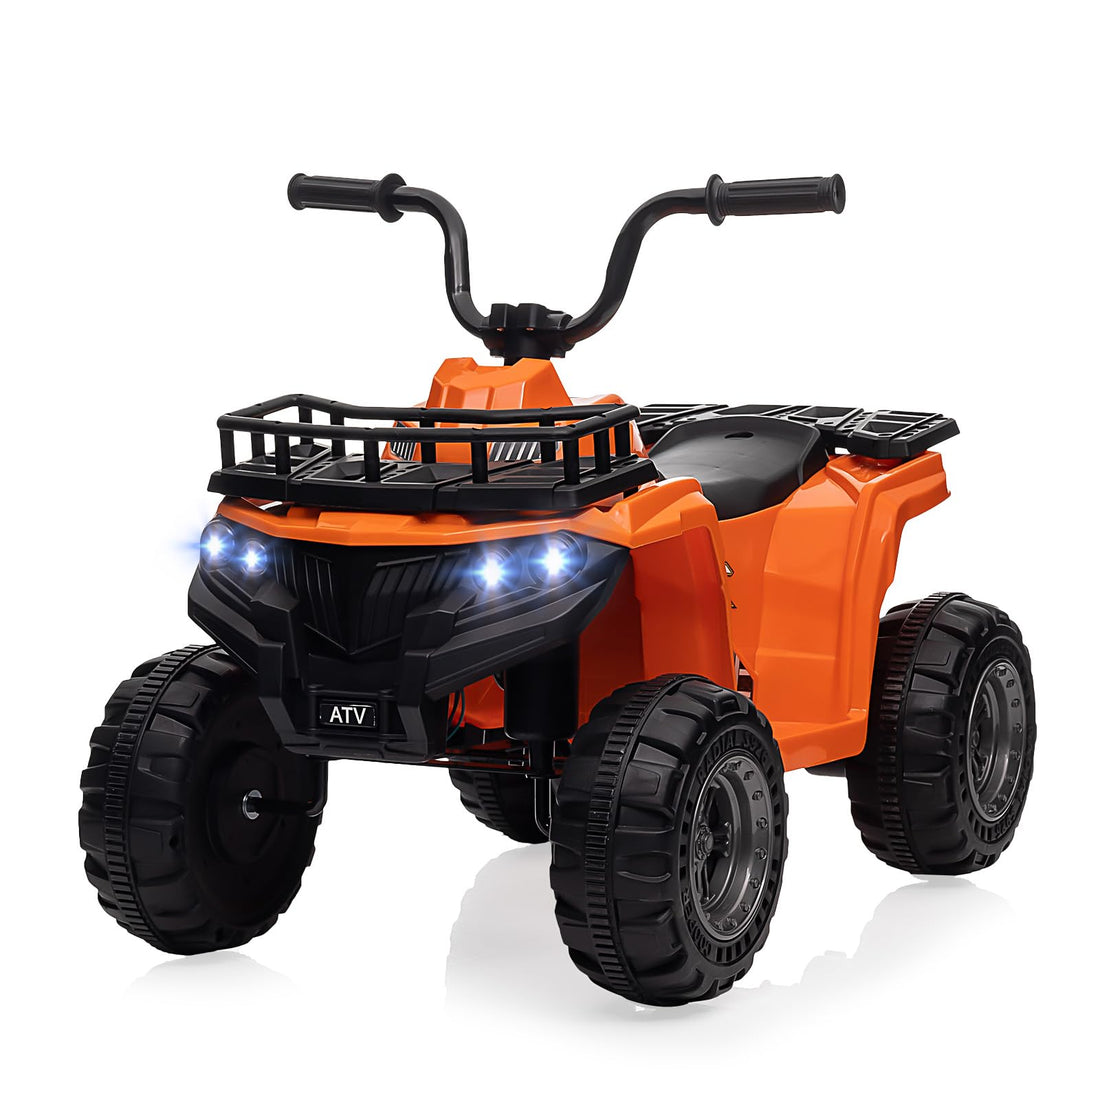 Garvee 12V Kids Ride-On ATV: Non-Toxic, Bluetooth, LED, 2 Speeds, All-Terrain, Orange